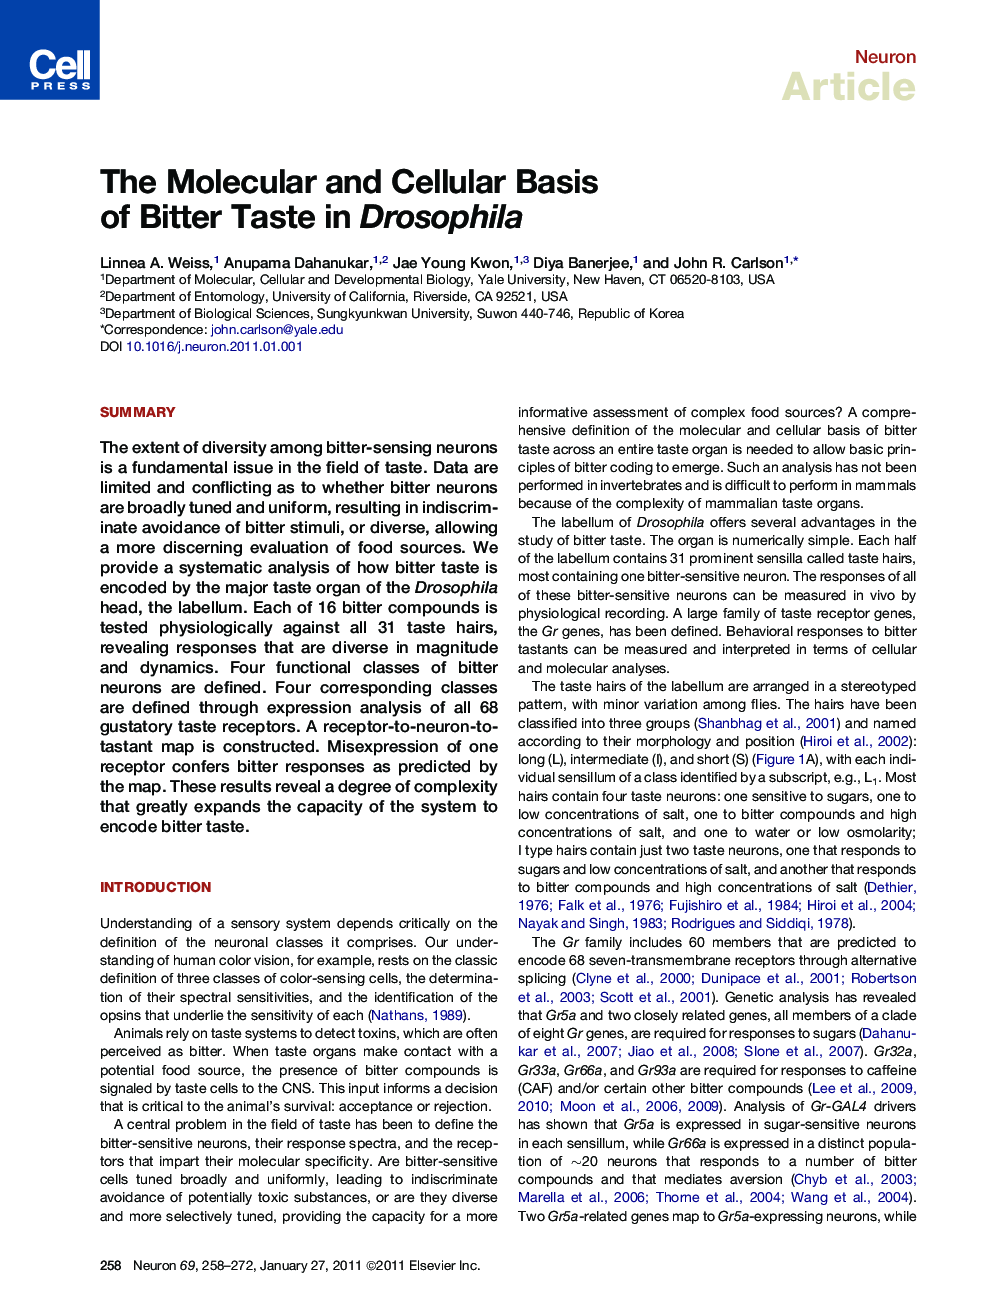 The Molecular and Cellular Basis of Bitter Taste in Drosophila